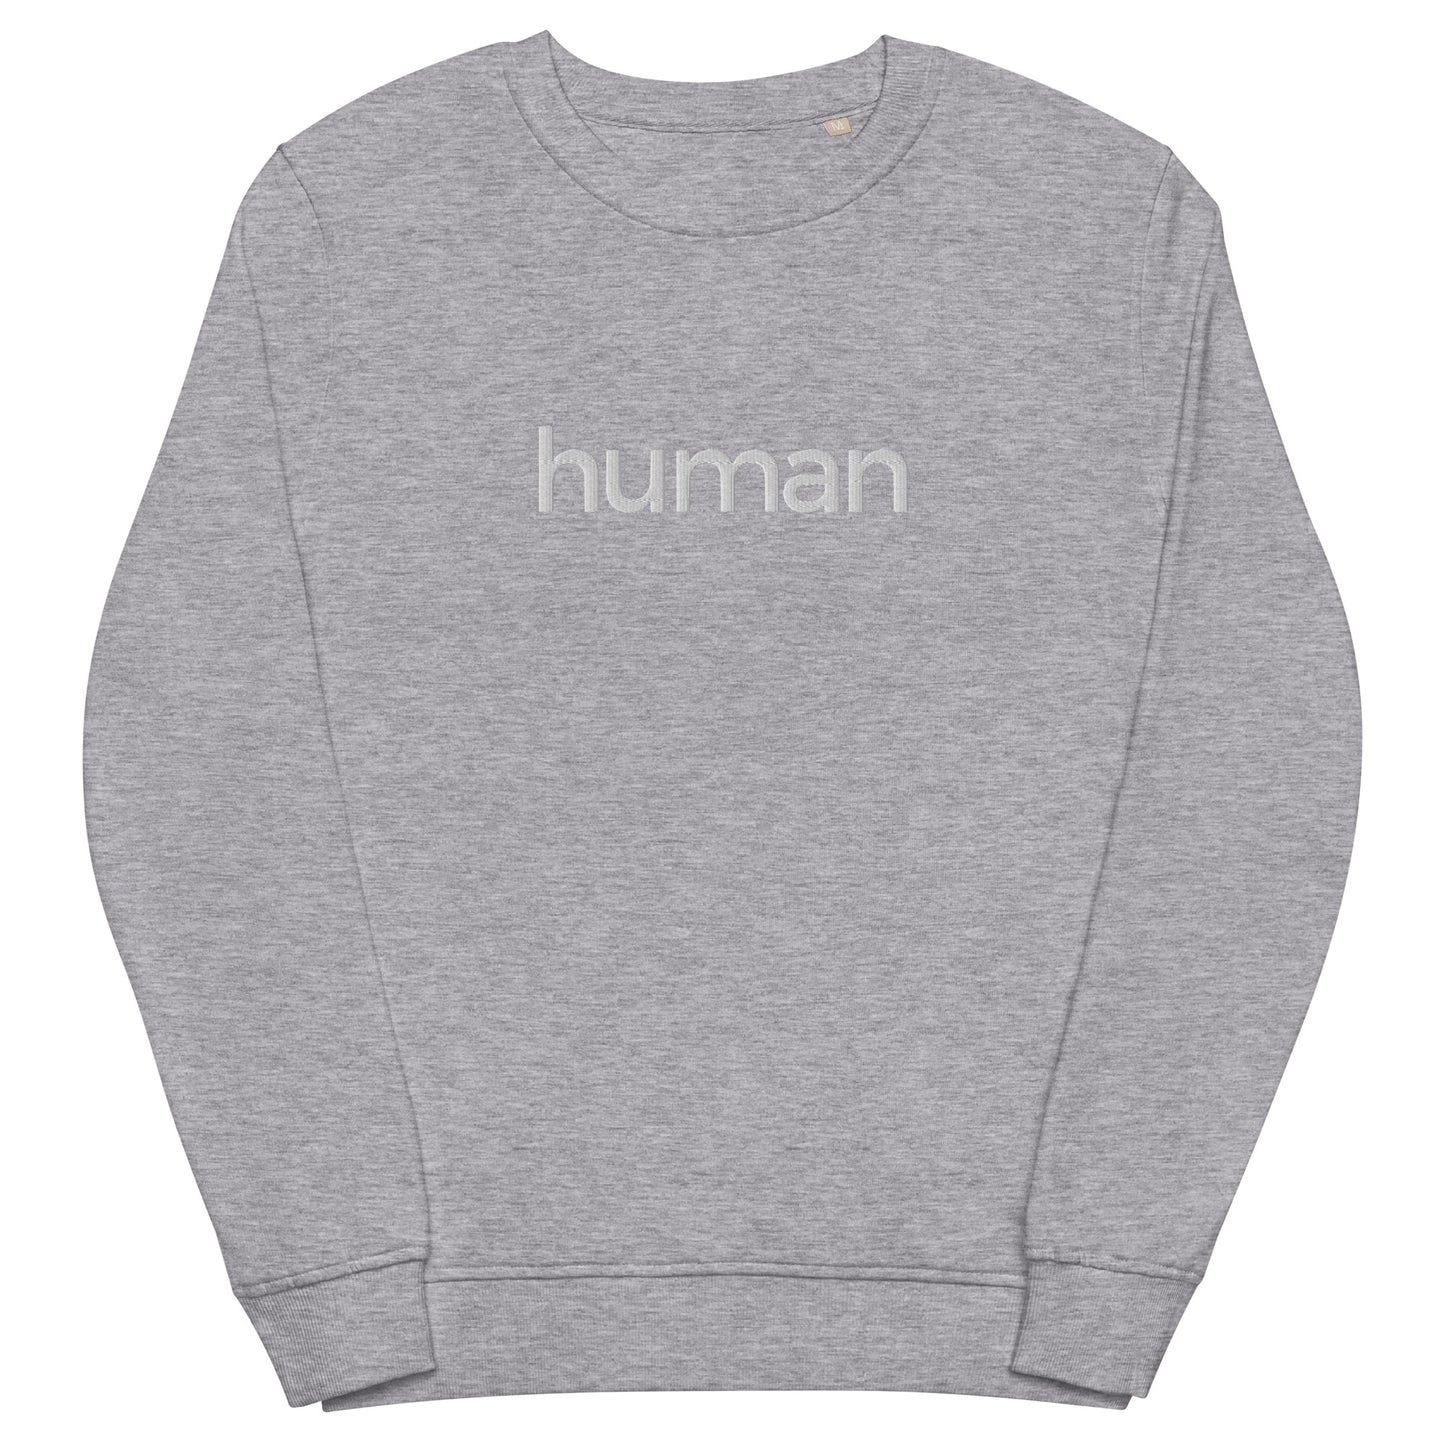 Human - Organic Sweatshirt